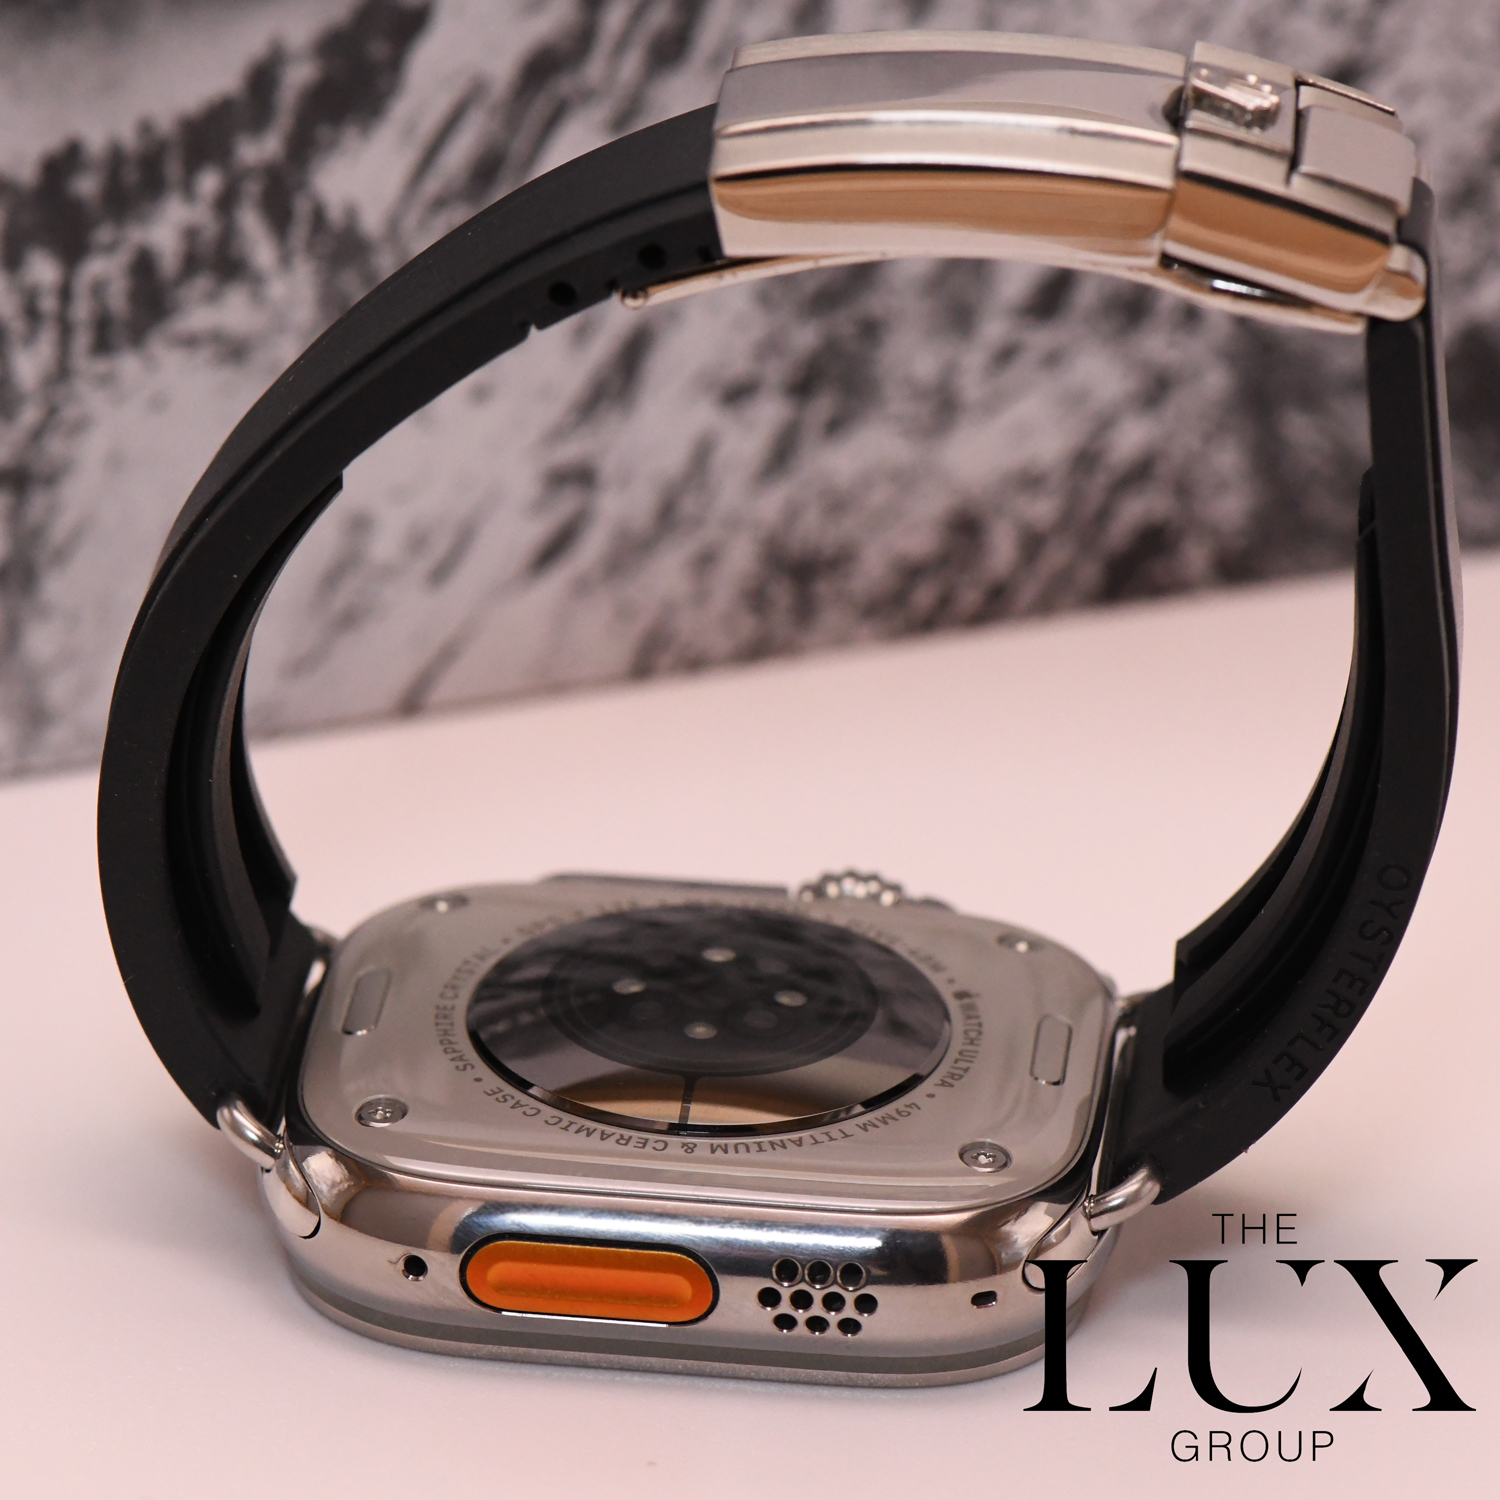 49mm Apple Watch Ultra 2 Titanium Diamond Polished with Rolex